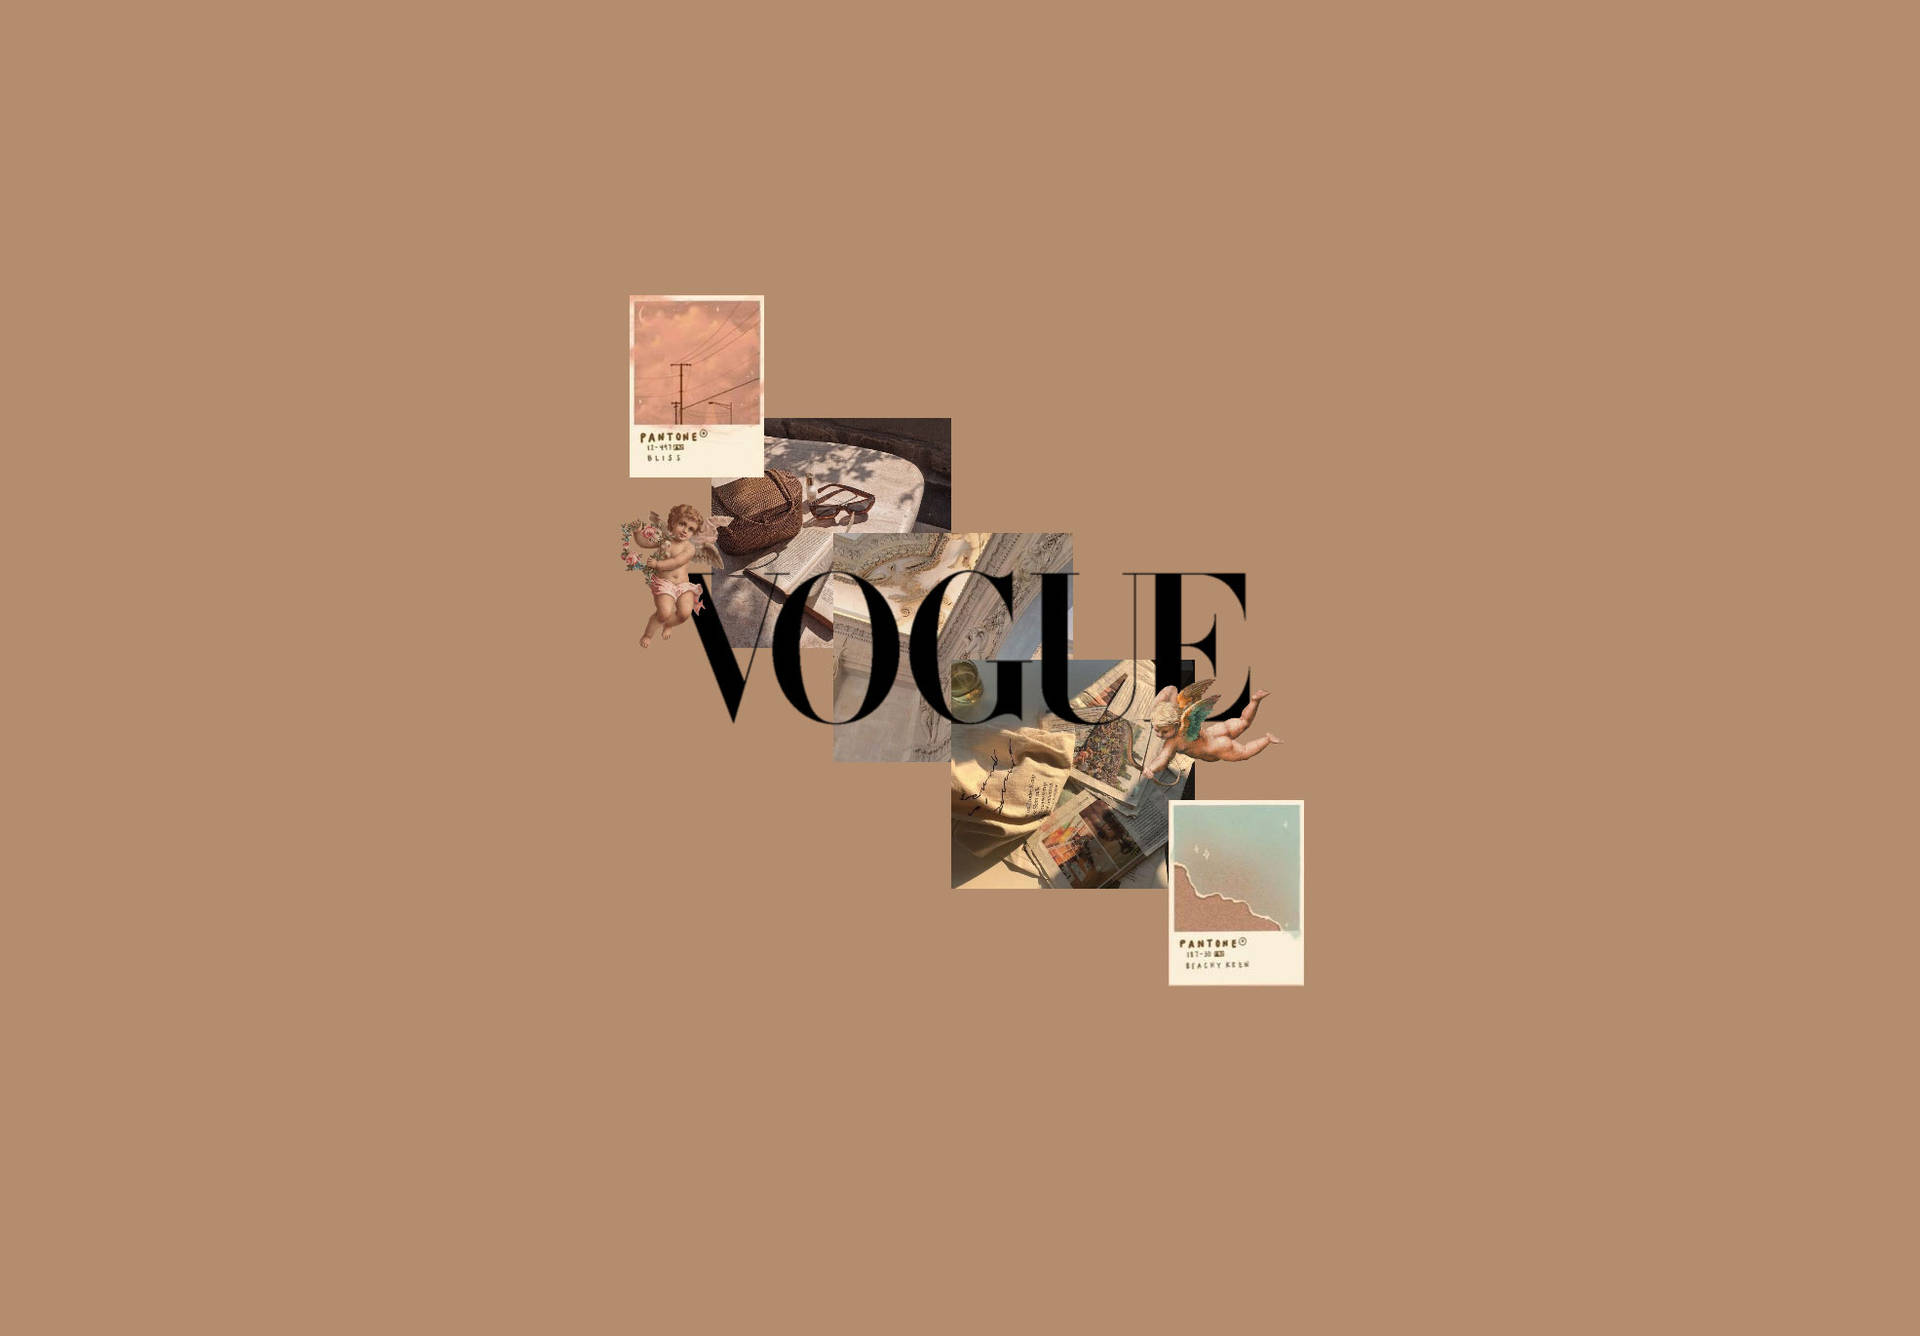 Vogue Magazine On Beige Brown Aesthetic Wallpaper